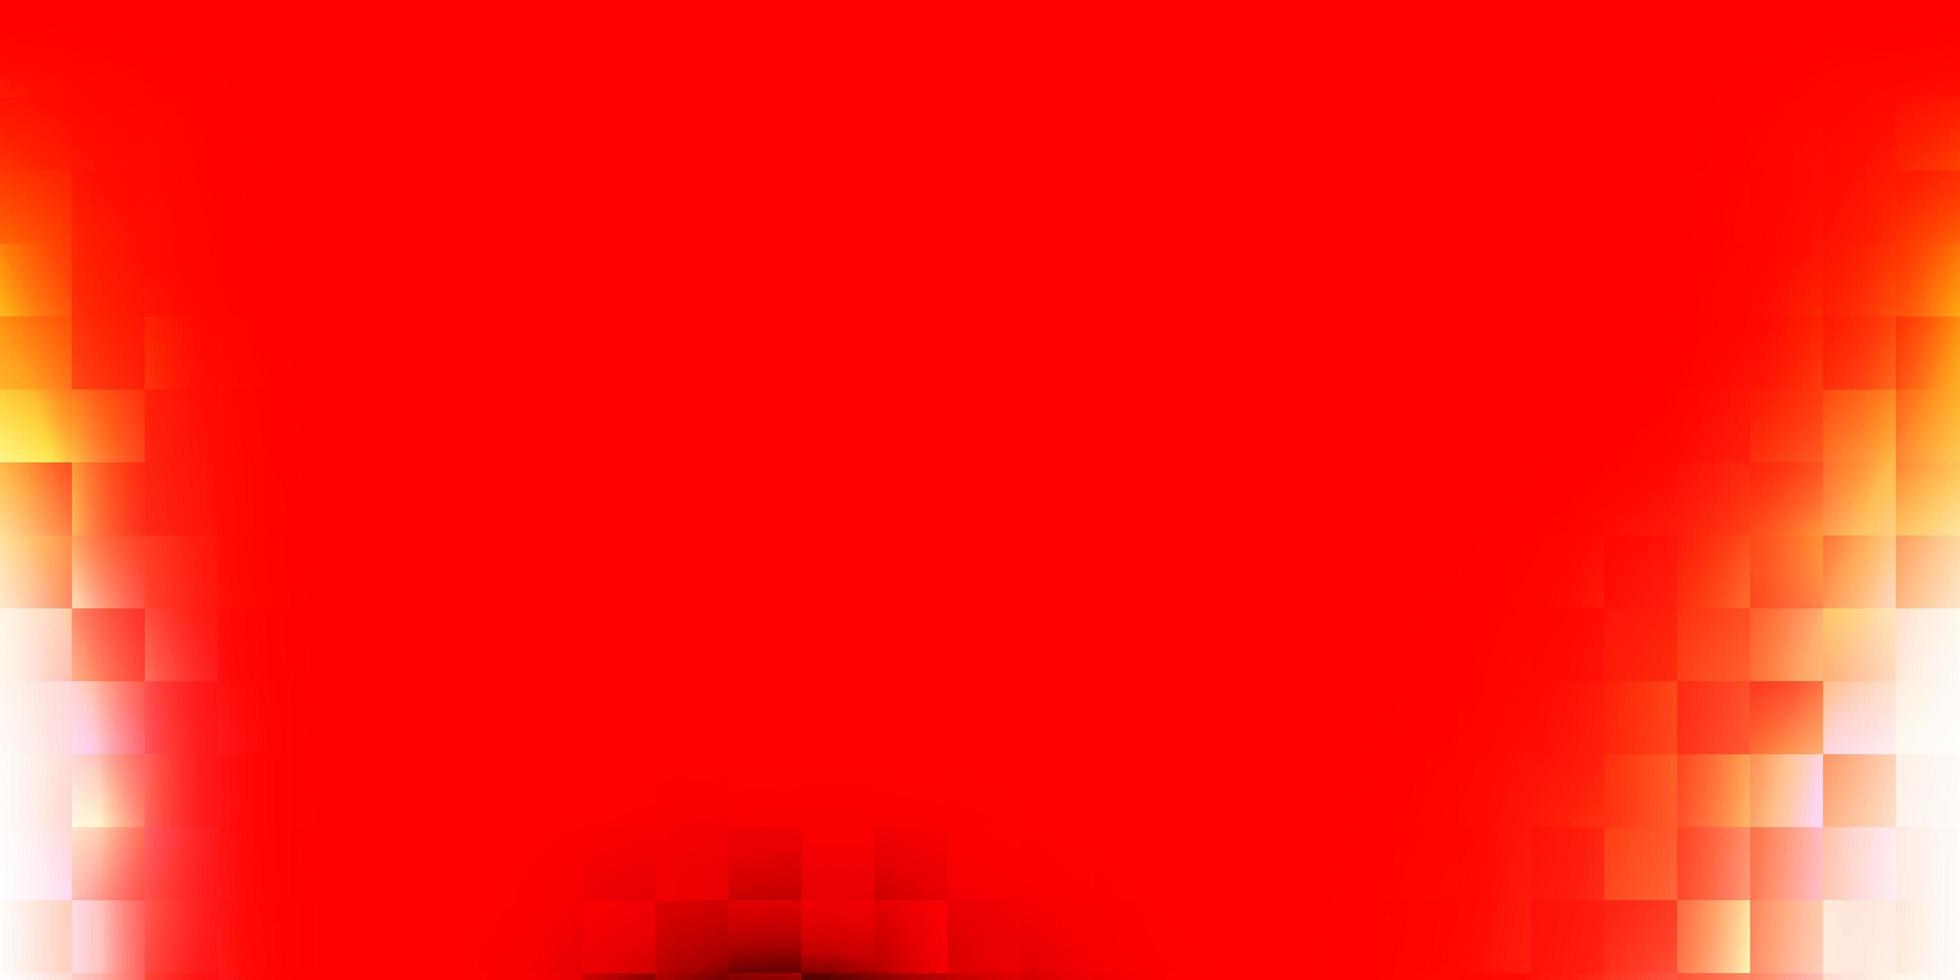 textura de vector rojo claro con formas de memphis.